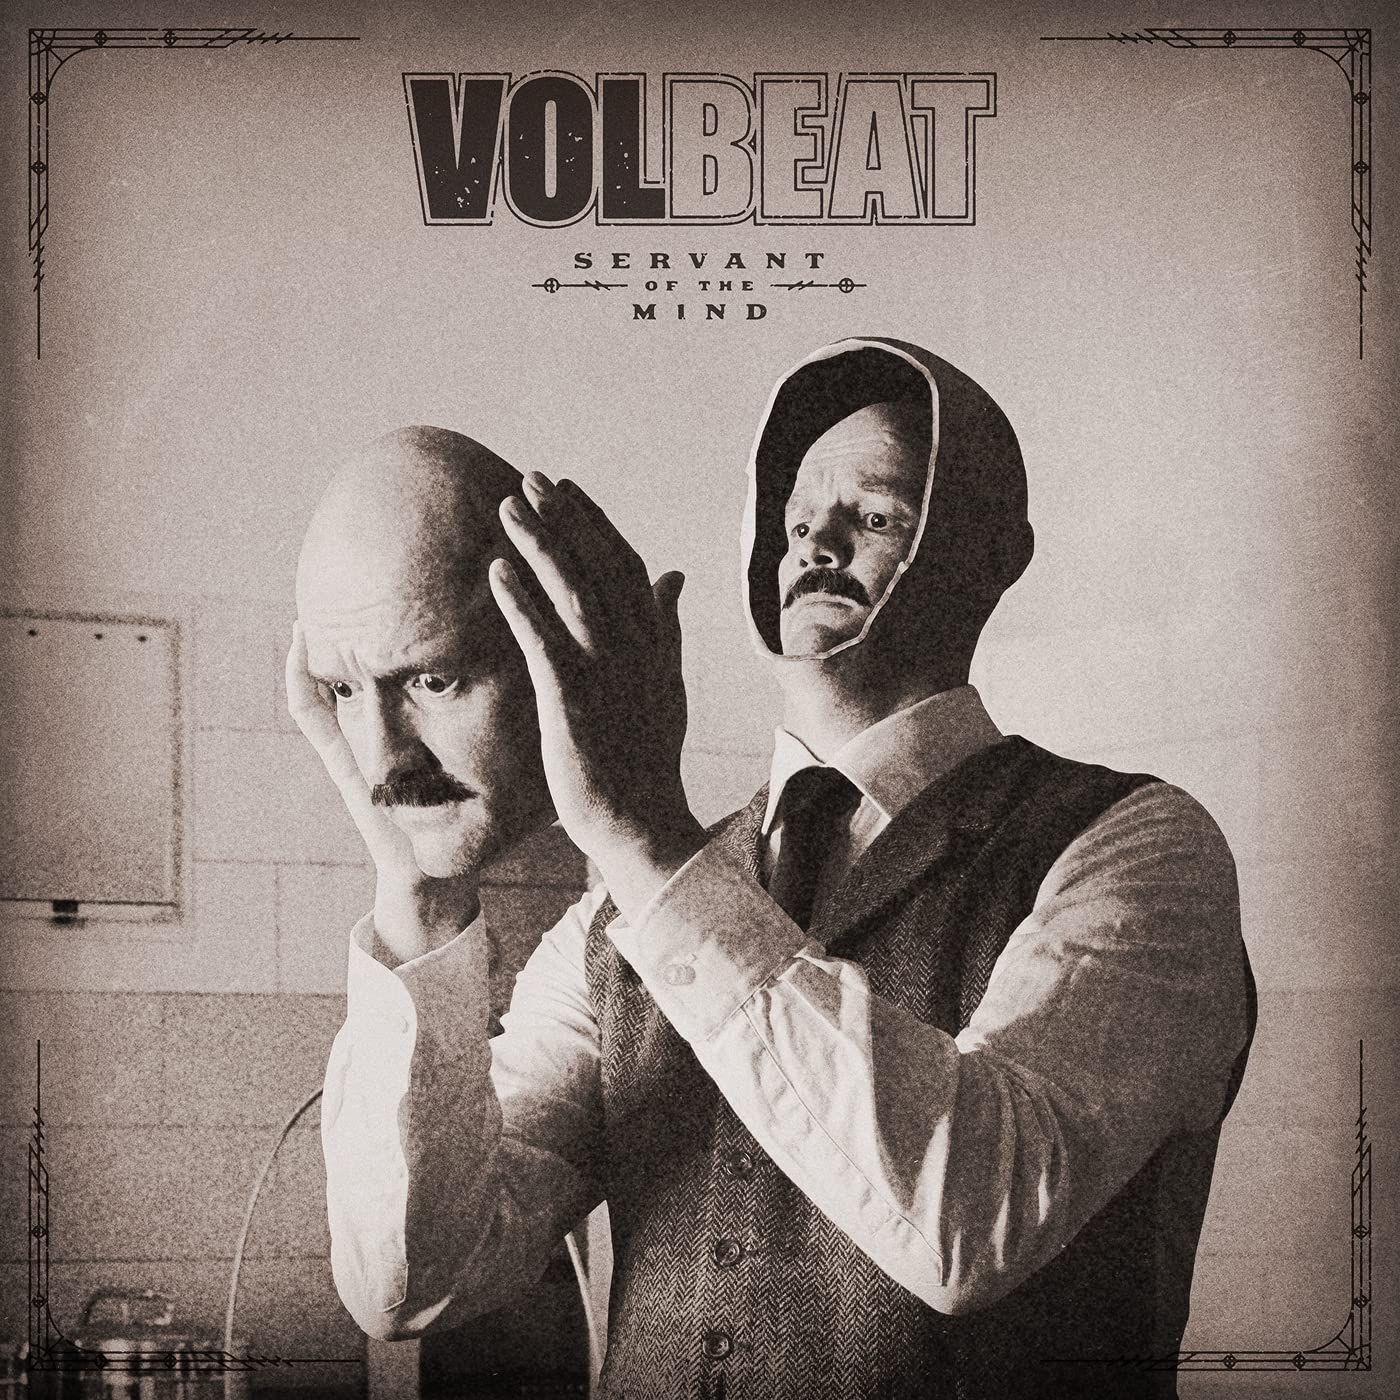 Volbeat-Servant Of The Mind-2CD-FLAC-2021-TOTENKVLT